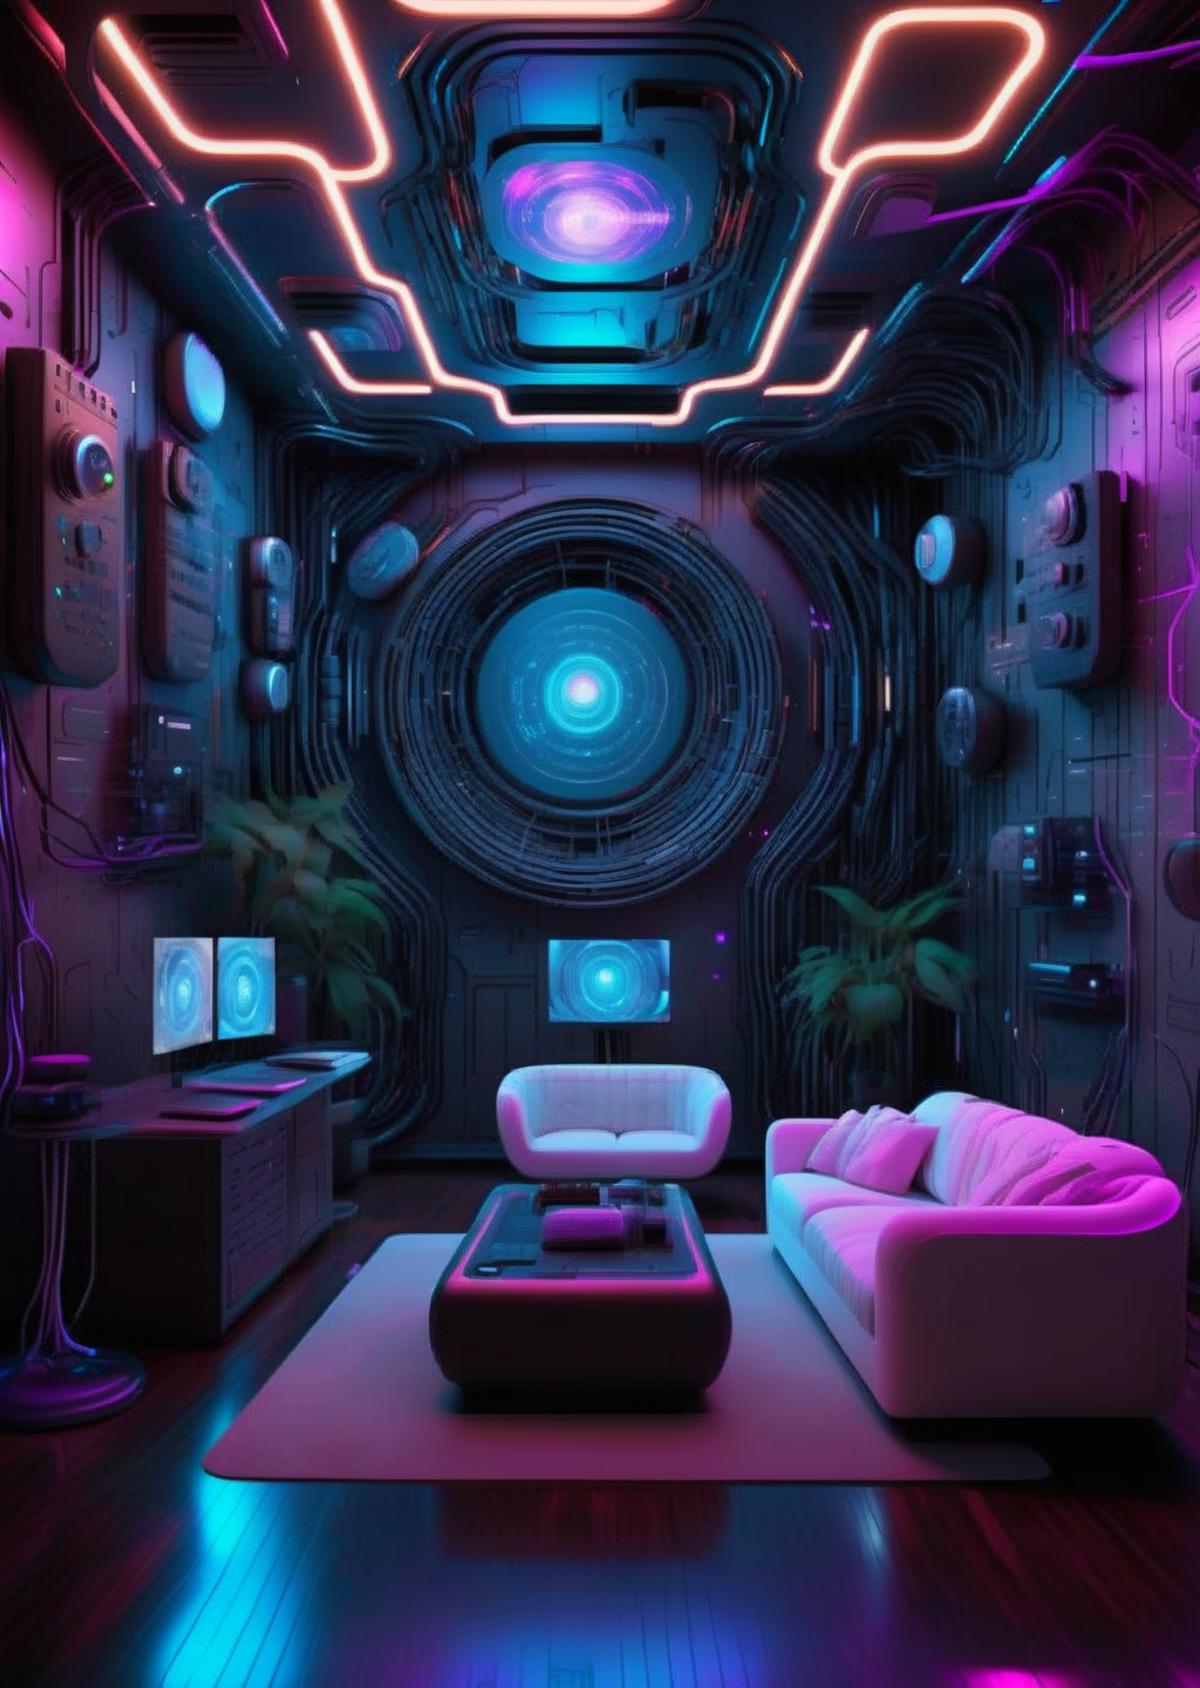 Cyber Room image by Ciro_Negrogni